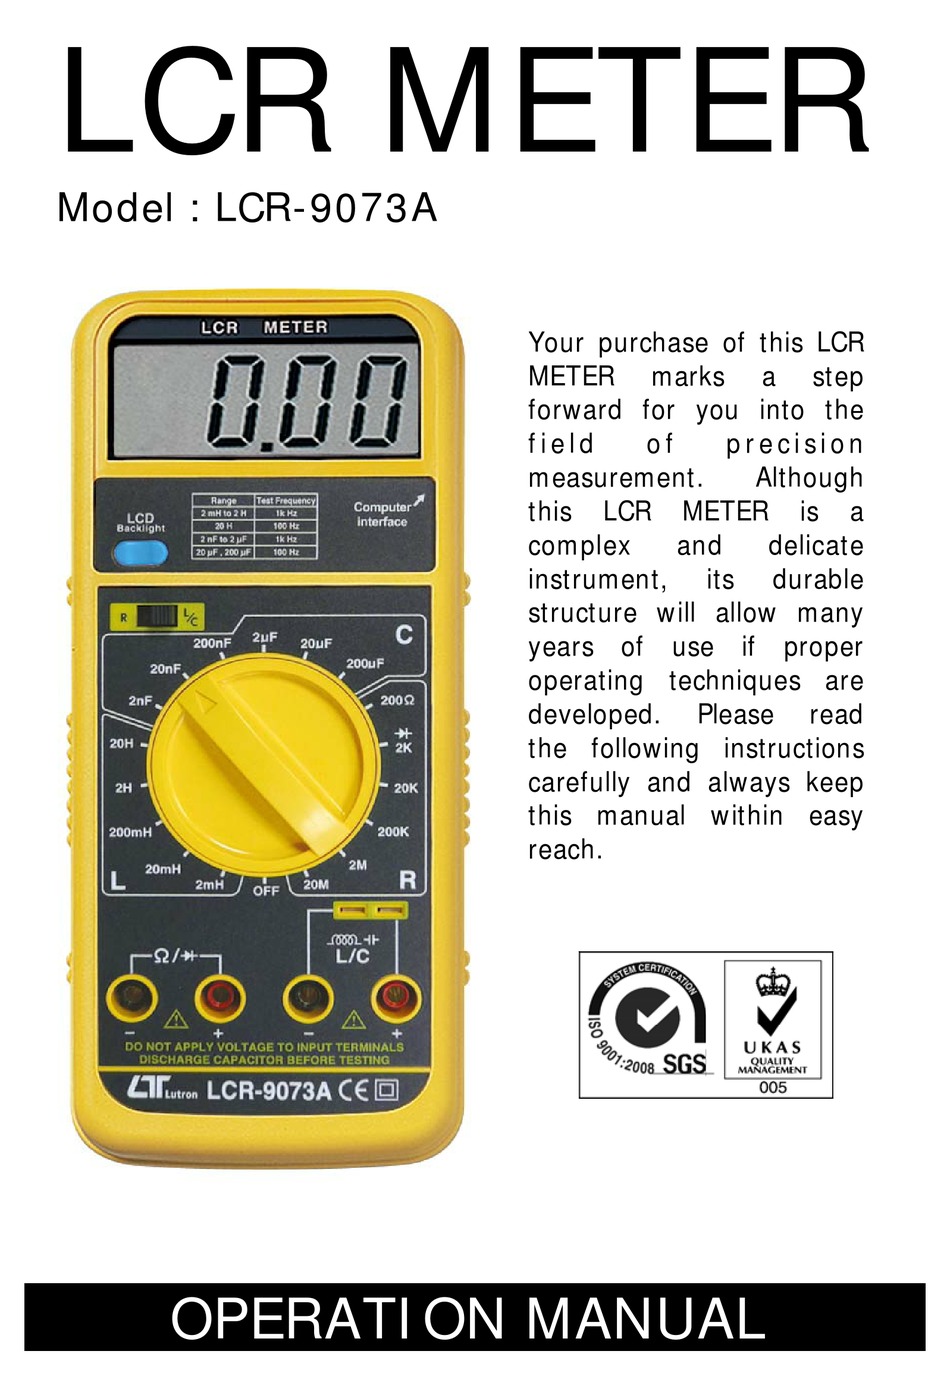 SUNWE LCR-9073A OPERATION MANUAL Pdf Download | ManualsLib